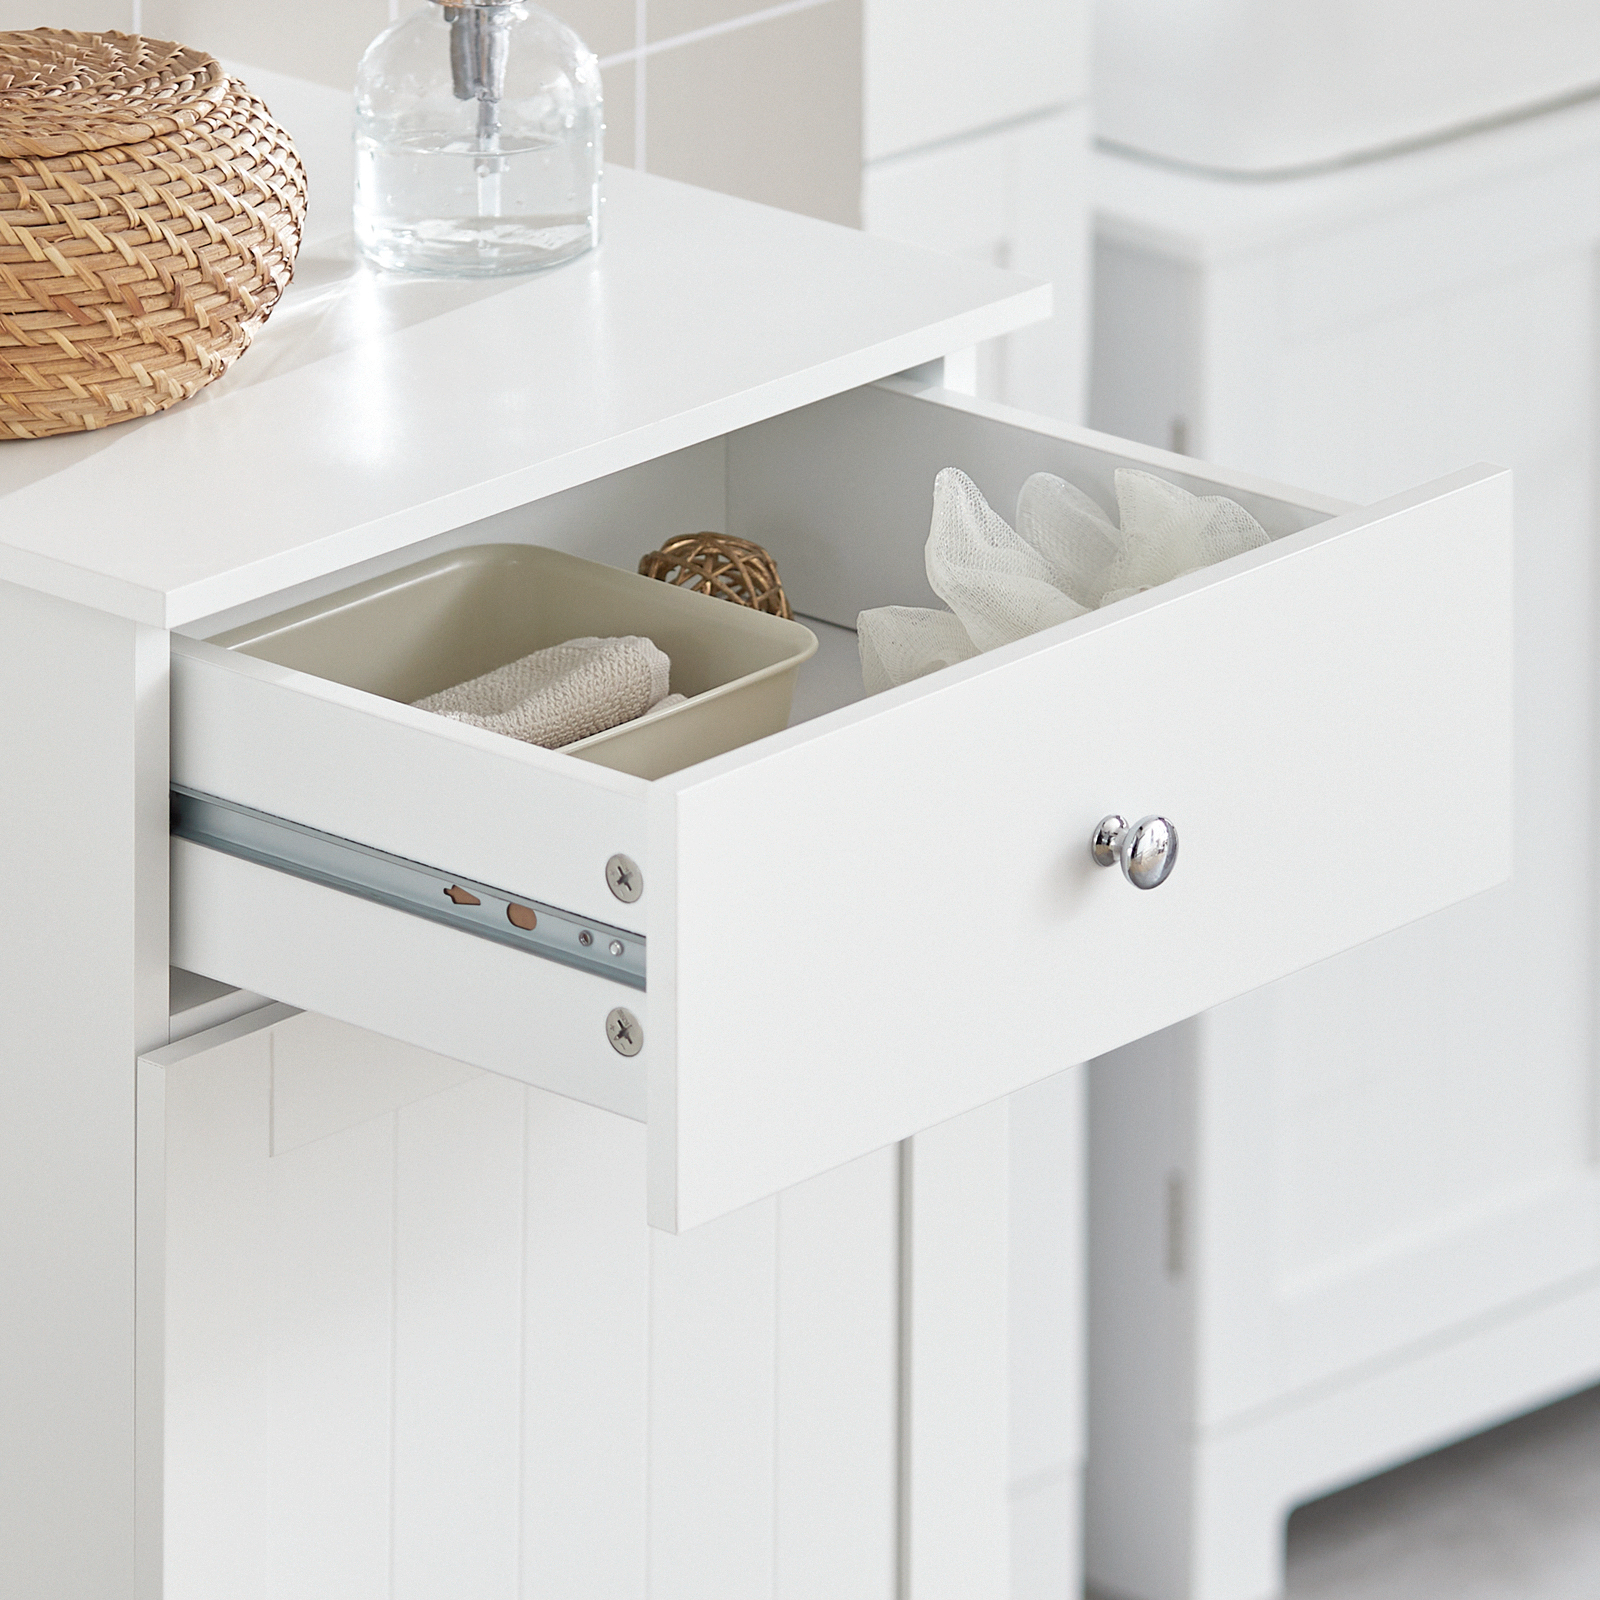 SoBuy White Bathroom Laundry Basket Bathroom Storage Cabinet Unit with Drawer,BZR21-W